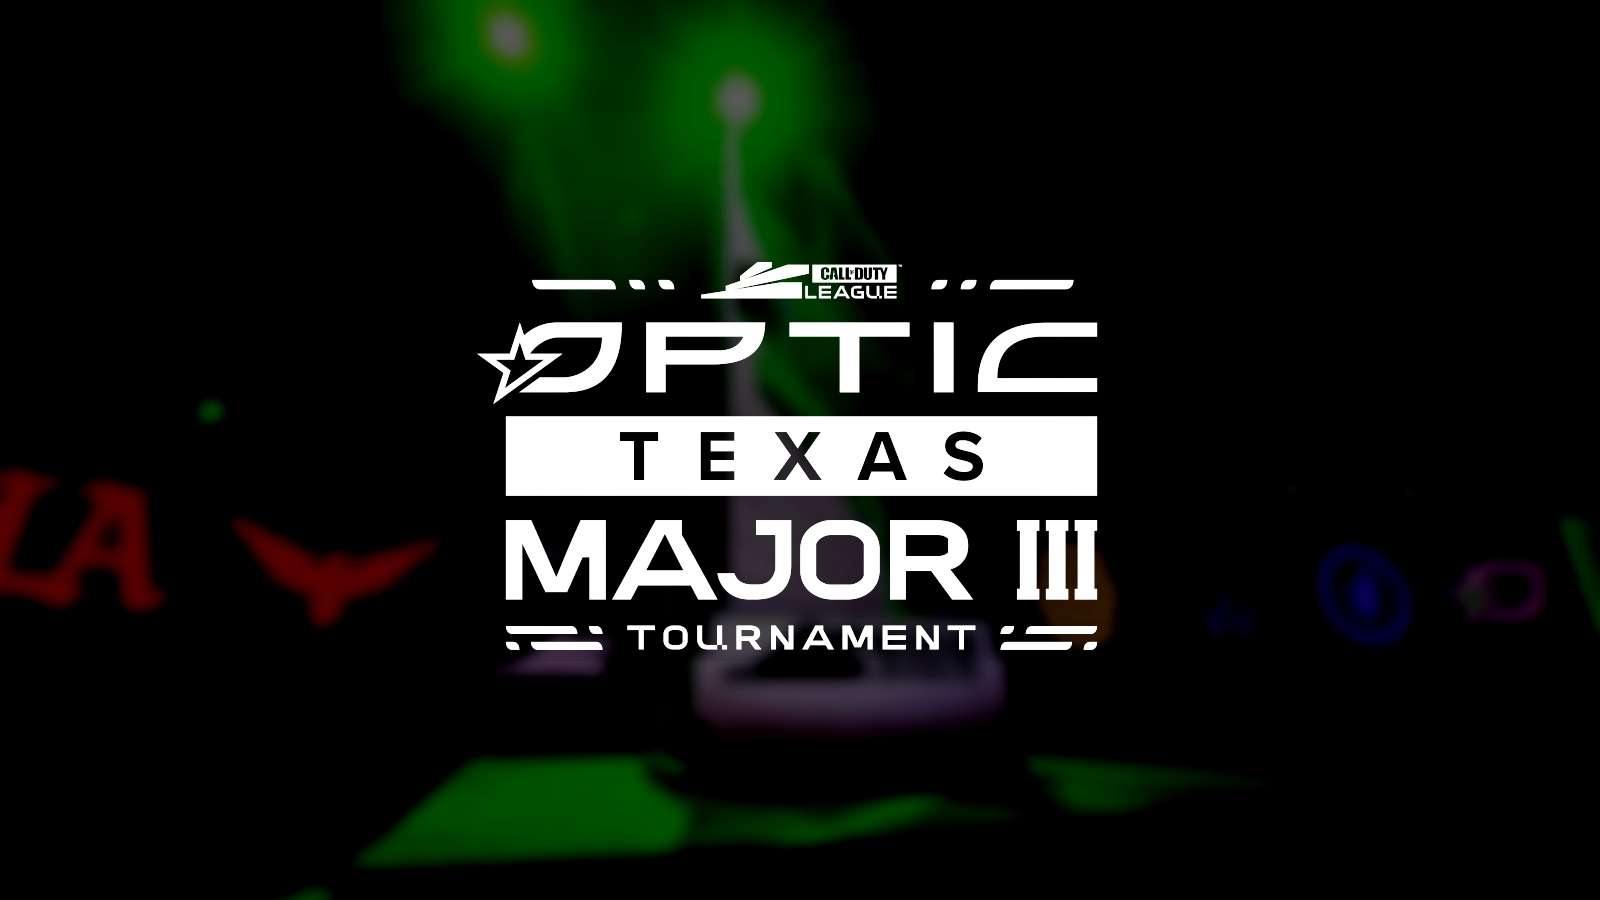 optic texas major 3 tournament logo